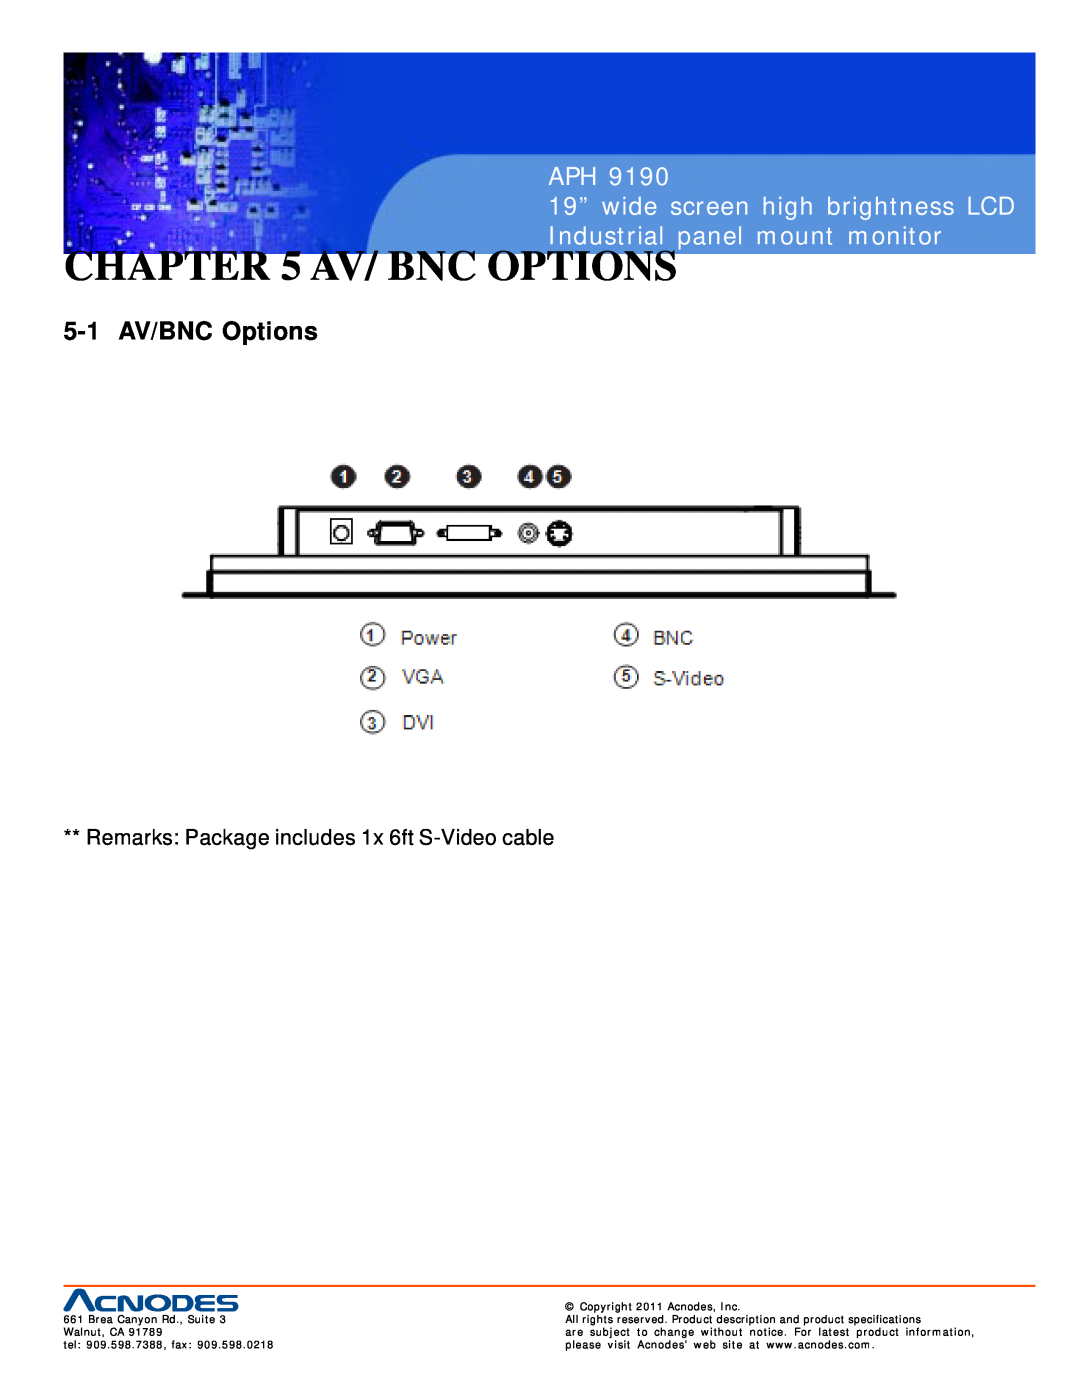 Acnodes APH 9190 Av/ Bnc Options, 5-1 AV/BNC Options, 19” wide screen high brightness LCD Industrial panel mount monitor 